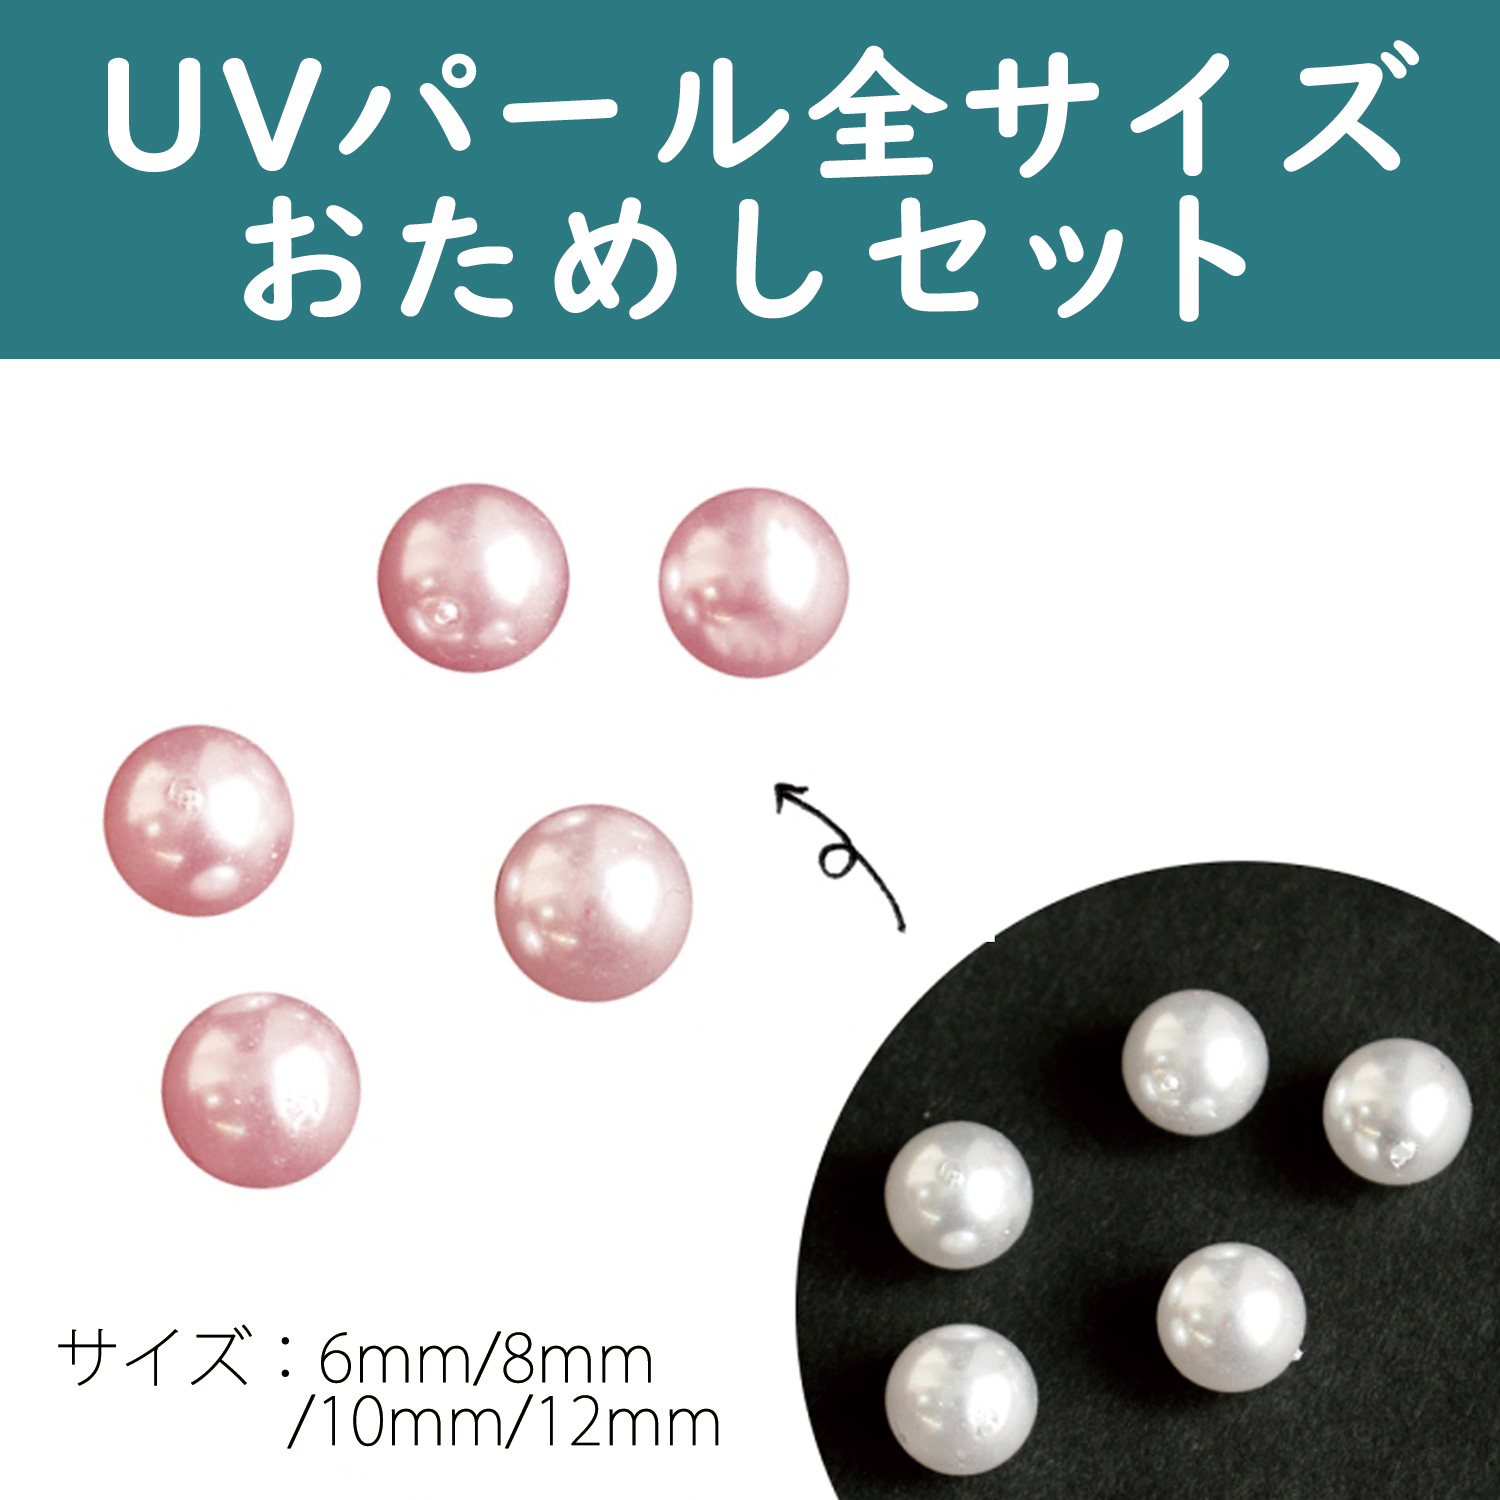 PA-UVMIX UVパール全サイズお試しセット 各サイズ×1袋 <計39個入> (セット)